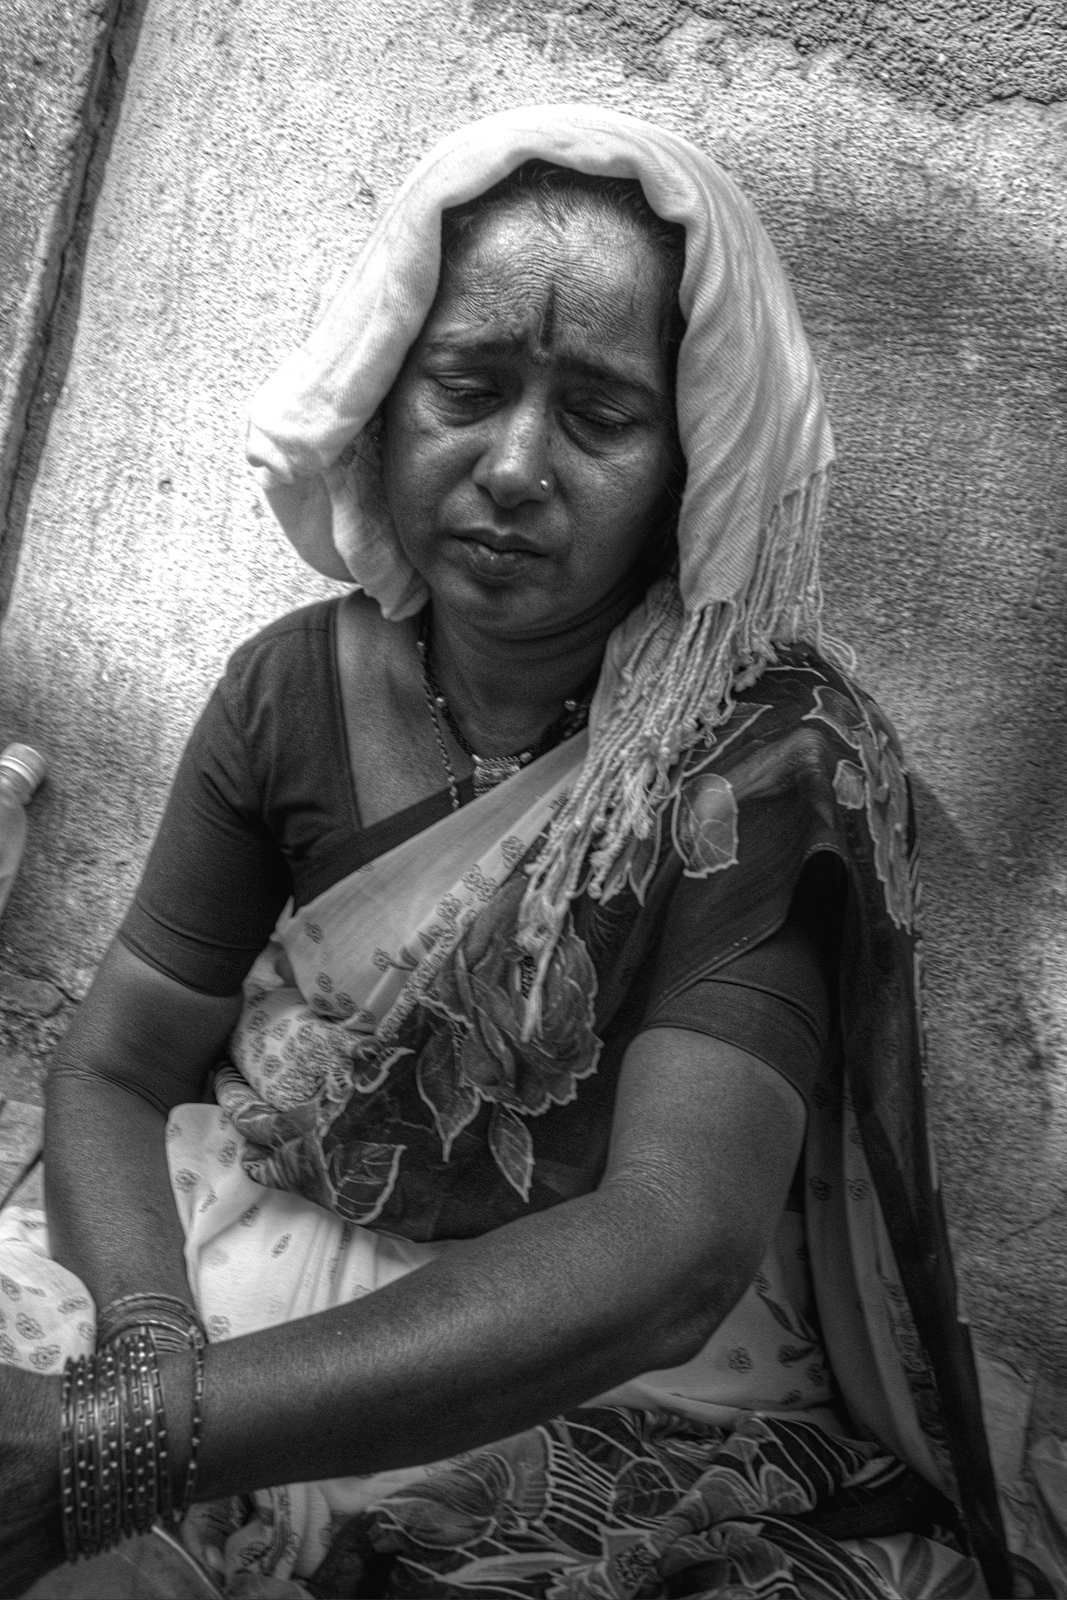 Sad woman in Mumbai, India